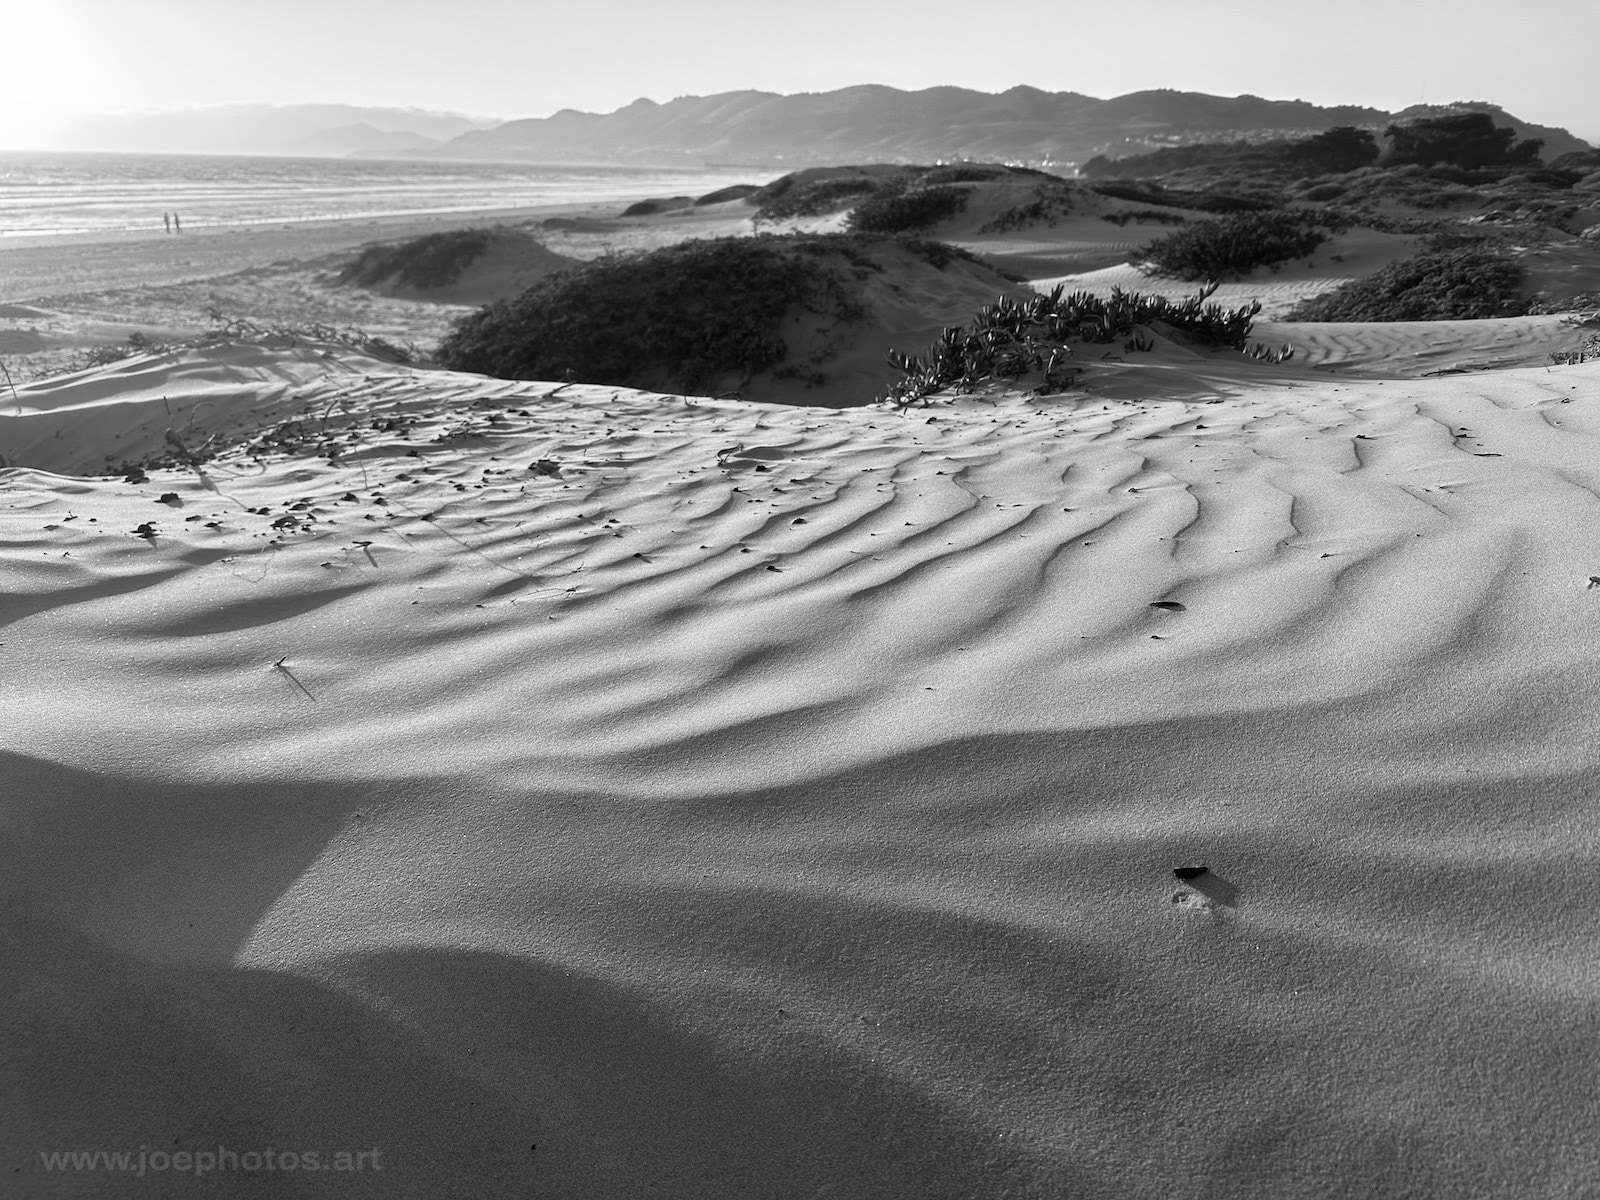 Monochrome sand ripples.